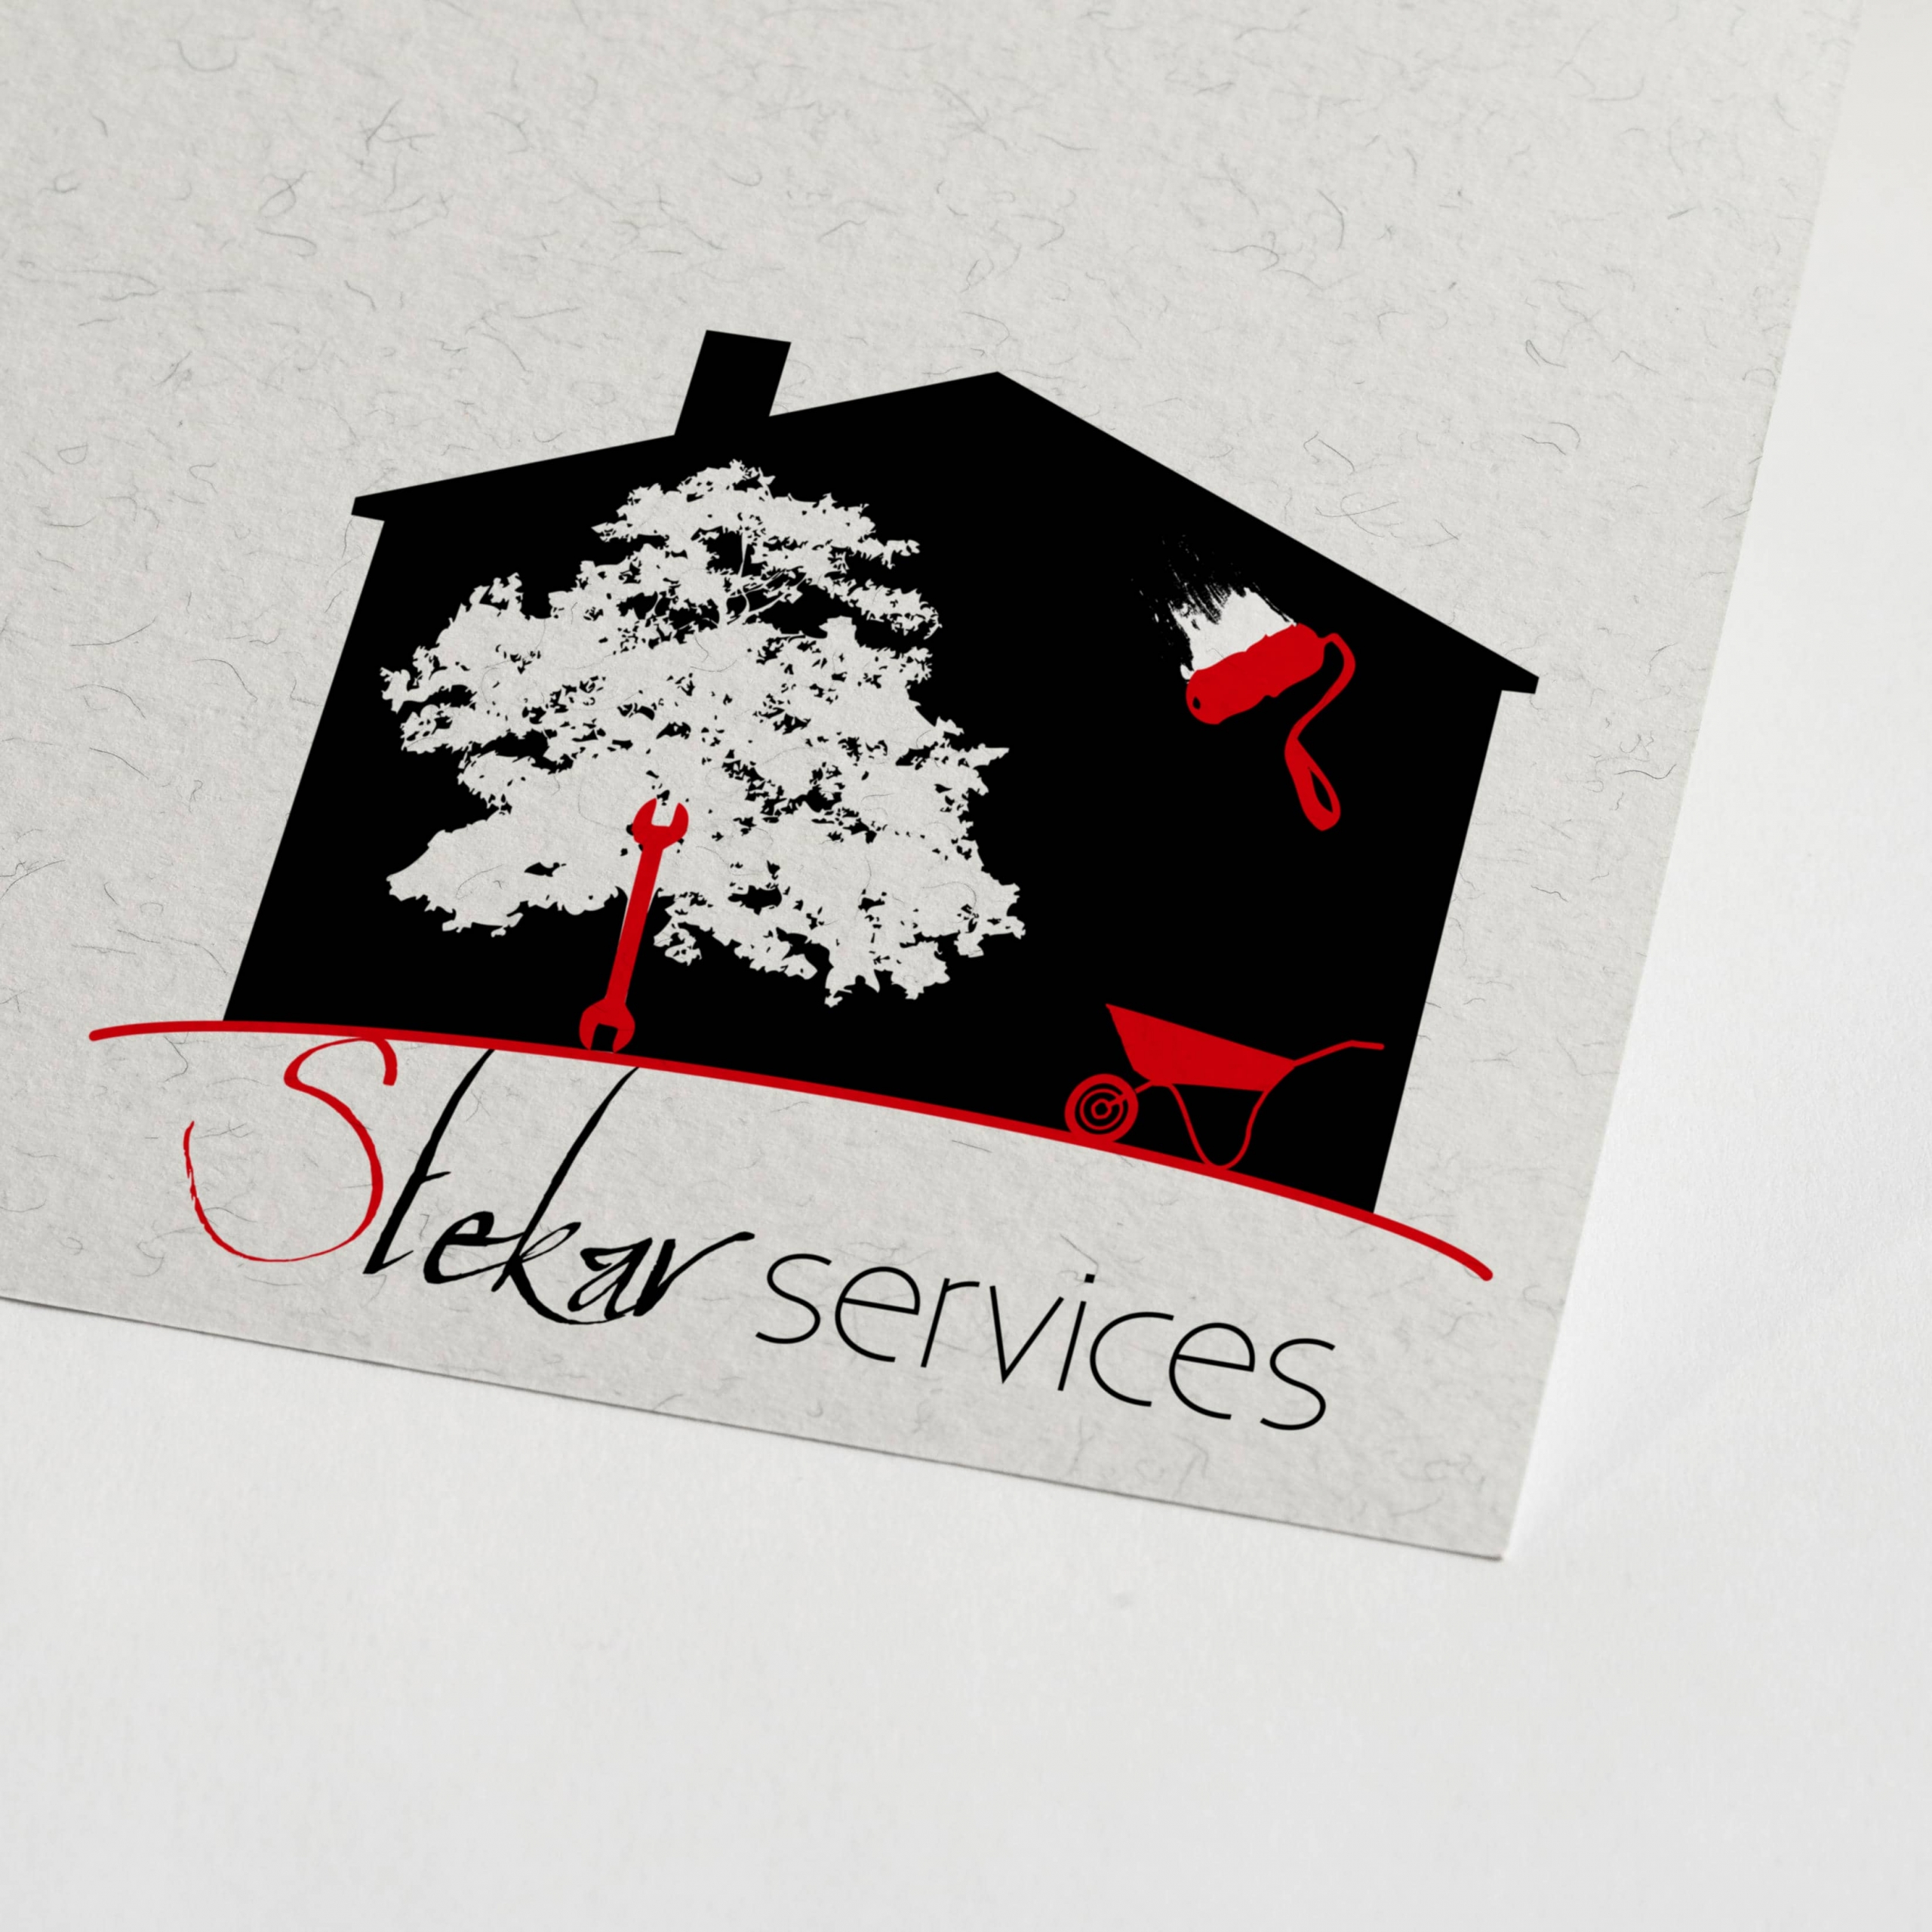 Logo Stekar Services - RANA ENCENDIDA - Graphiste - Crépy-en-Valois - Oise